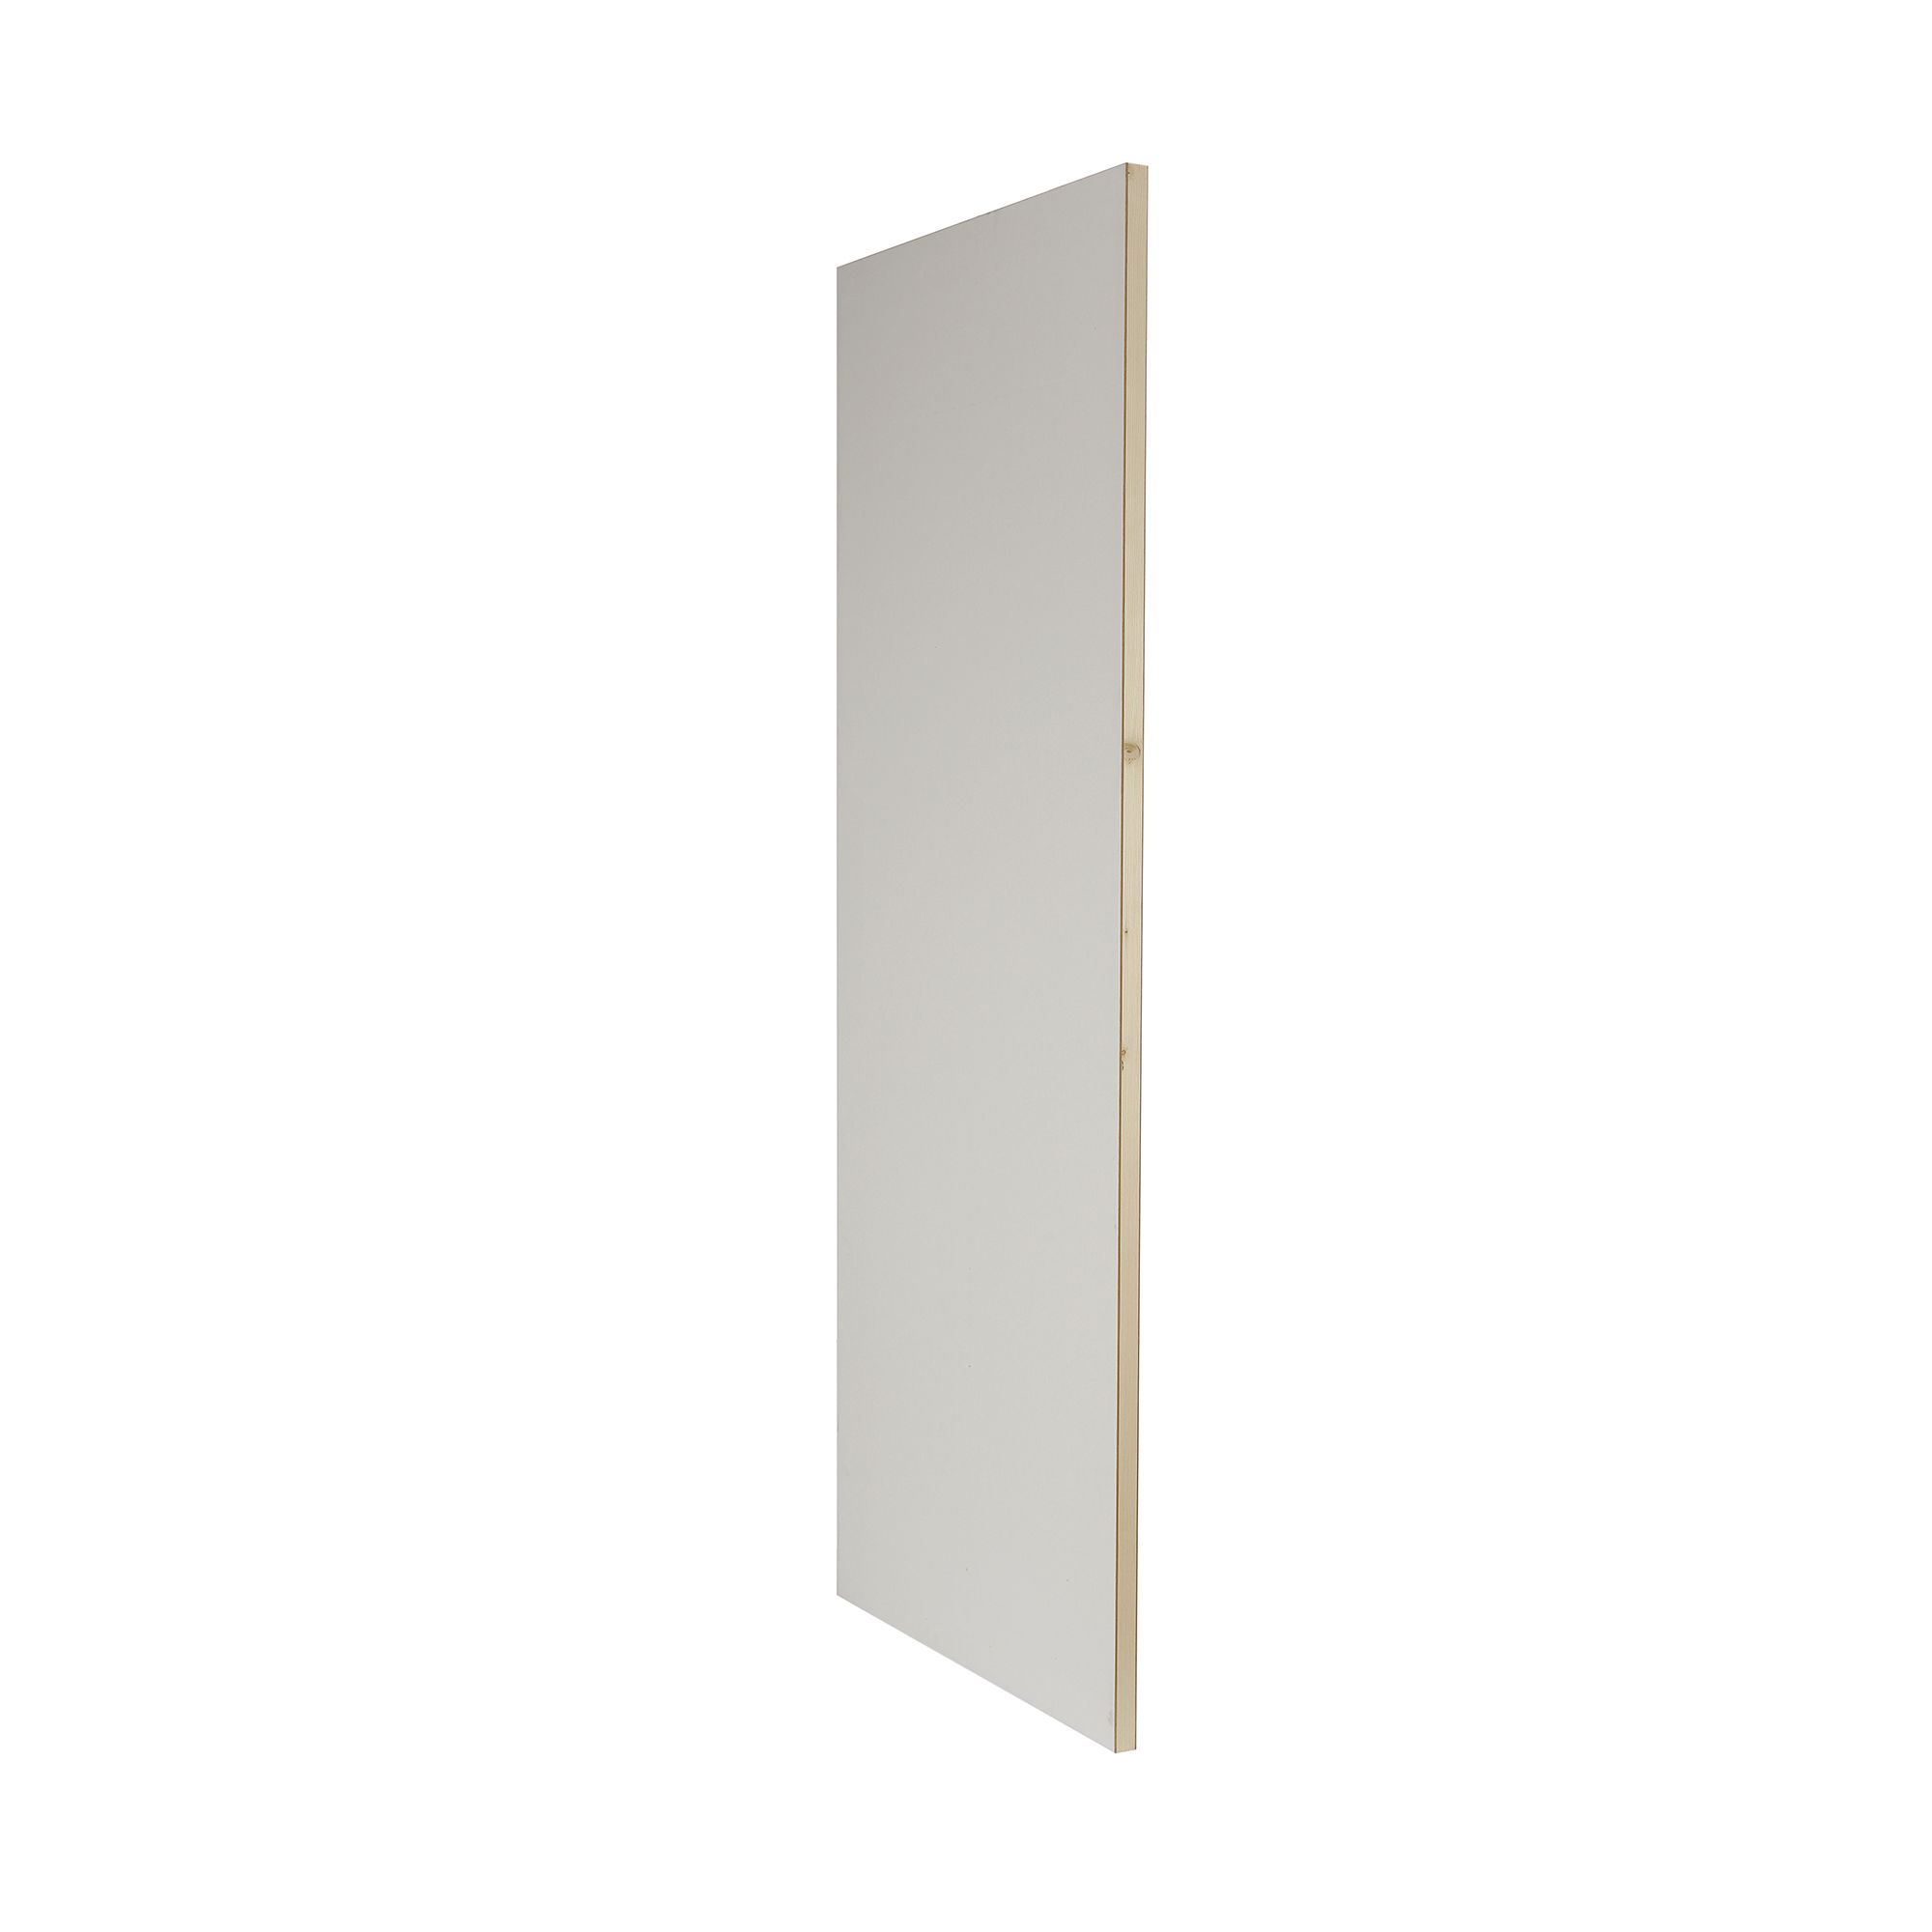 Jeld-Wen Flush White Internal Fire door, (H)1981mm (W)838mm (T)44mm